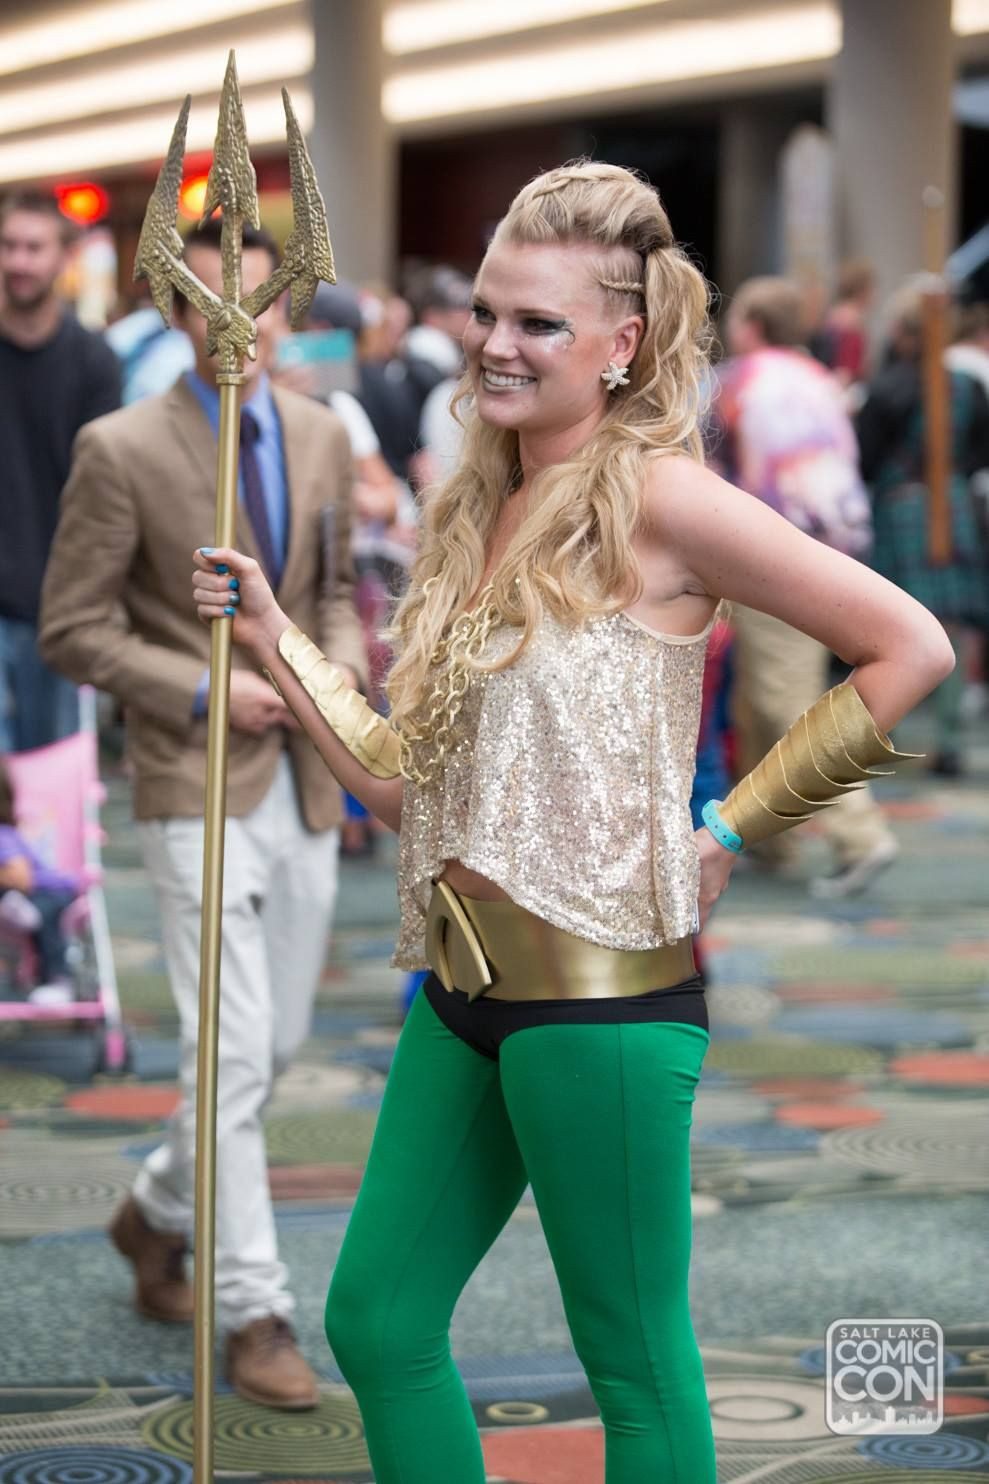 Aquaman Costume DIY
 Female Aquaman cosplay at Salt Lake ic Con 2014